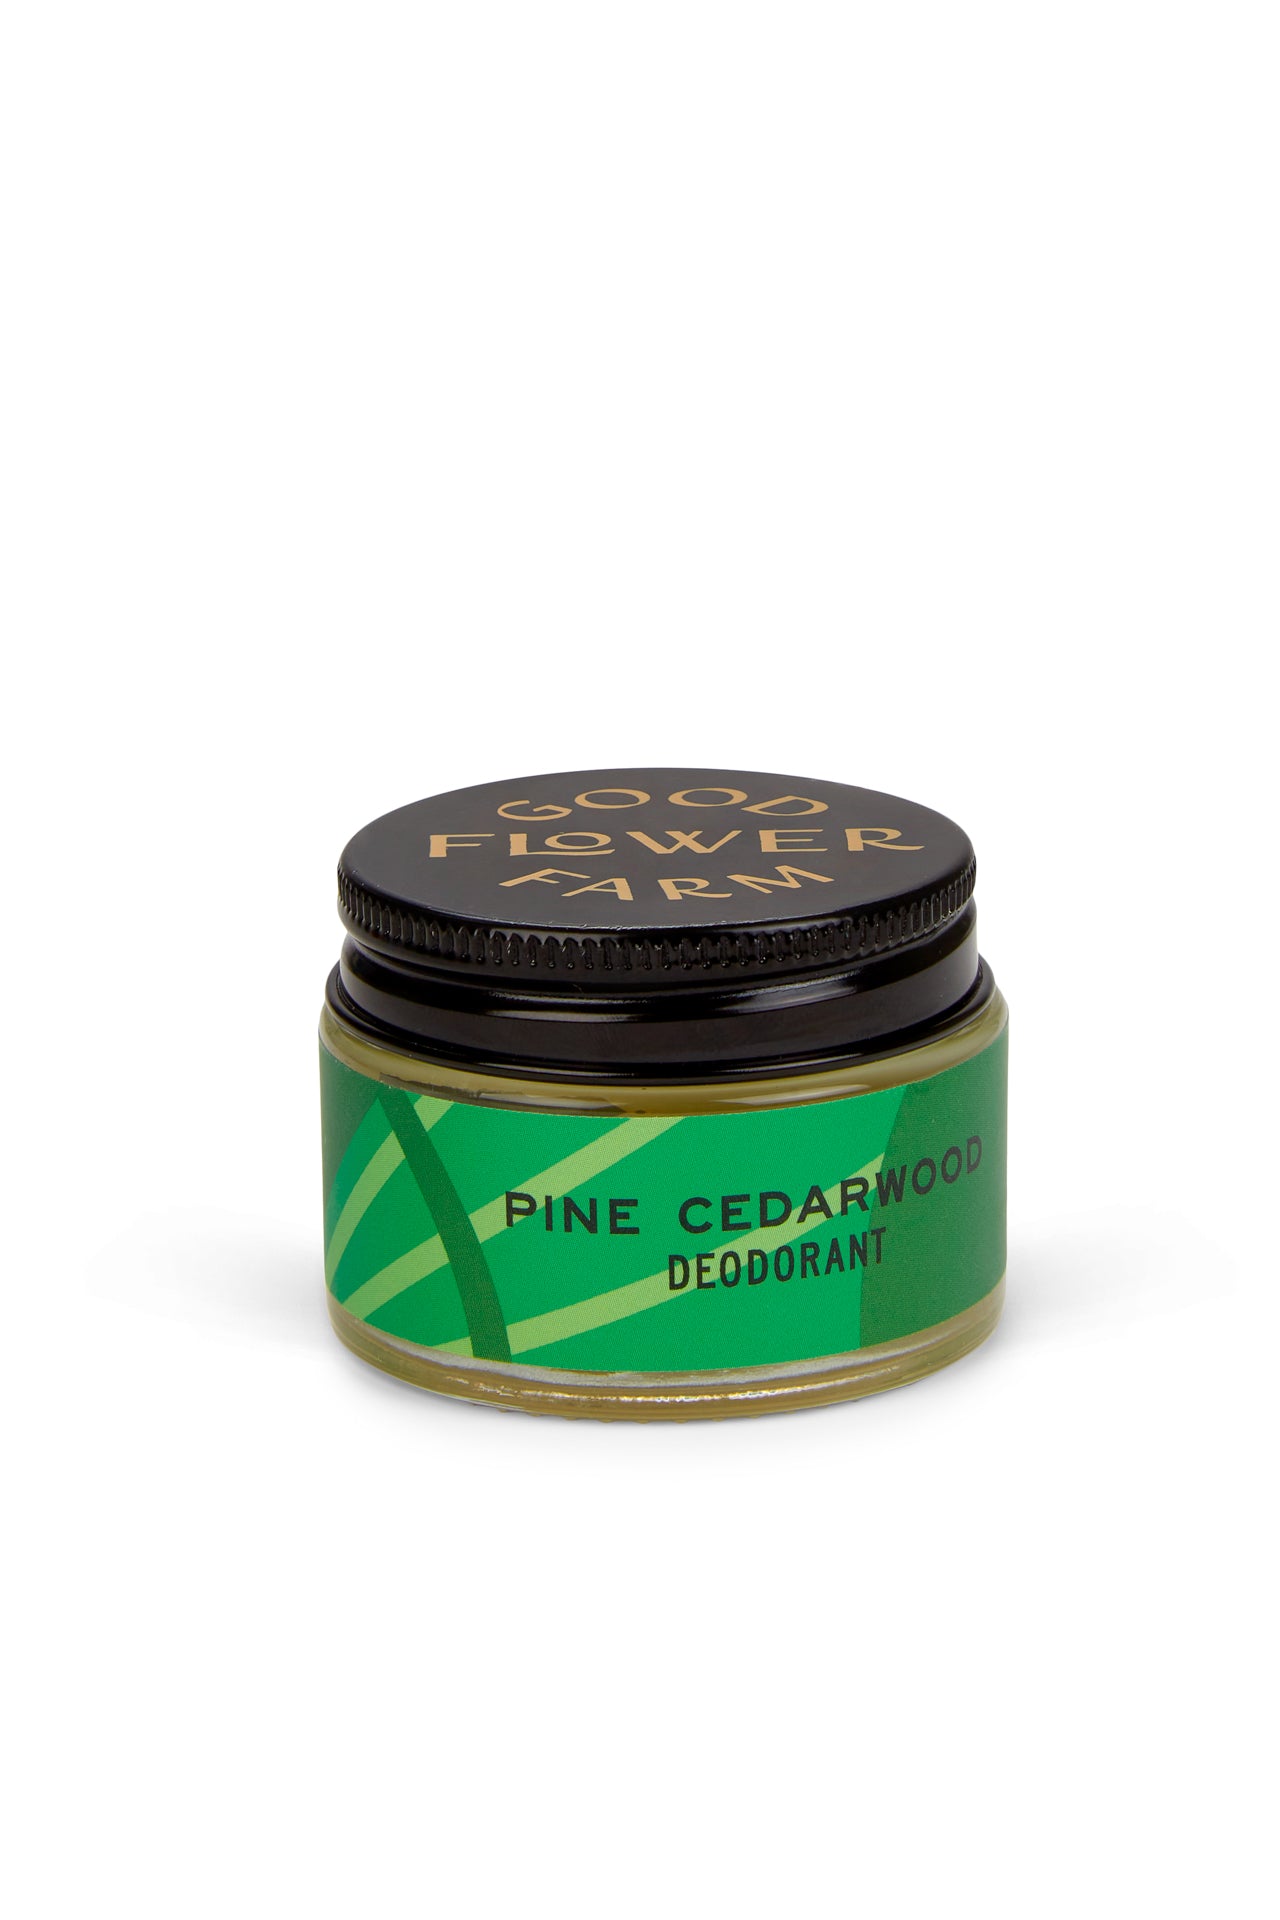 Pine Cedarwood Deodorant Jar